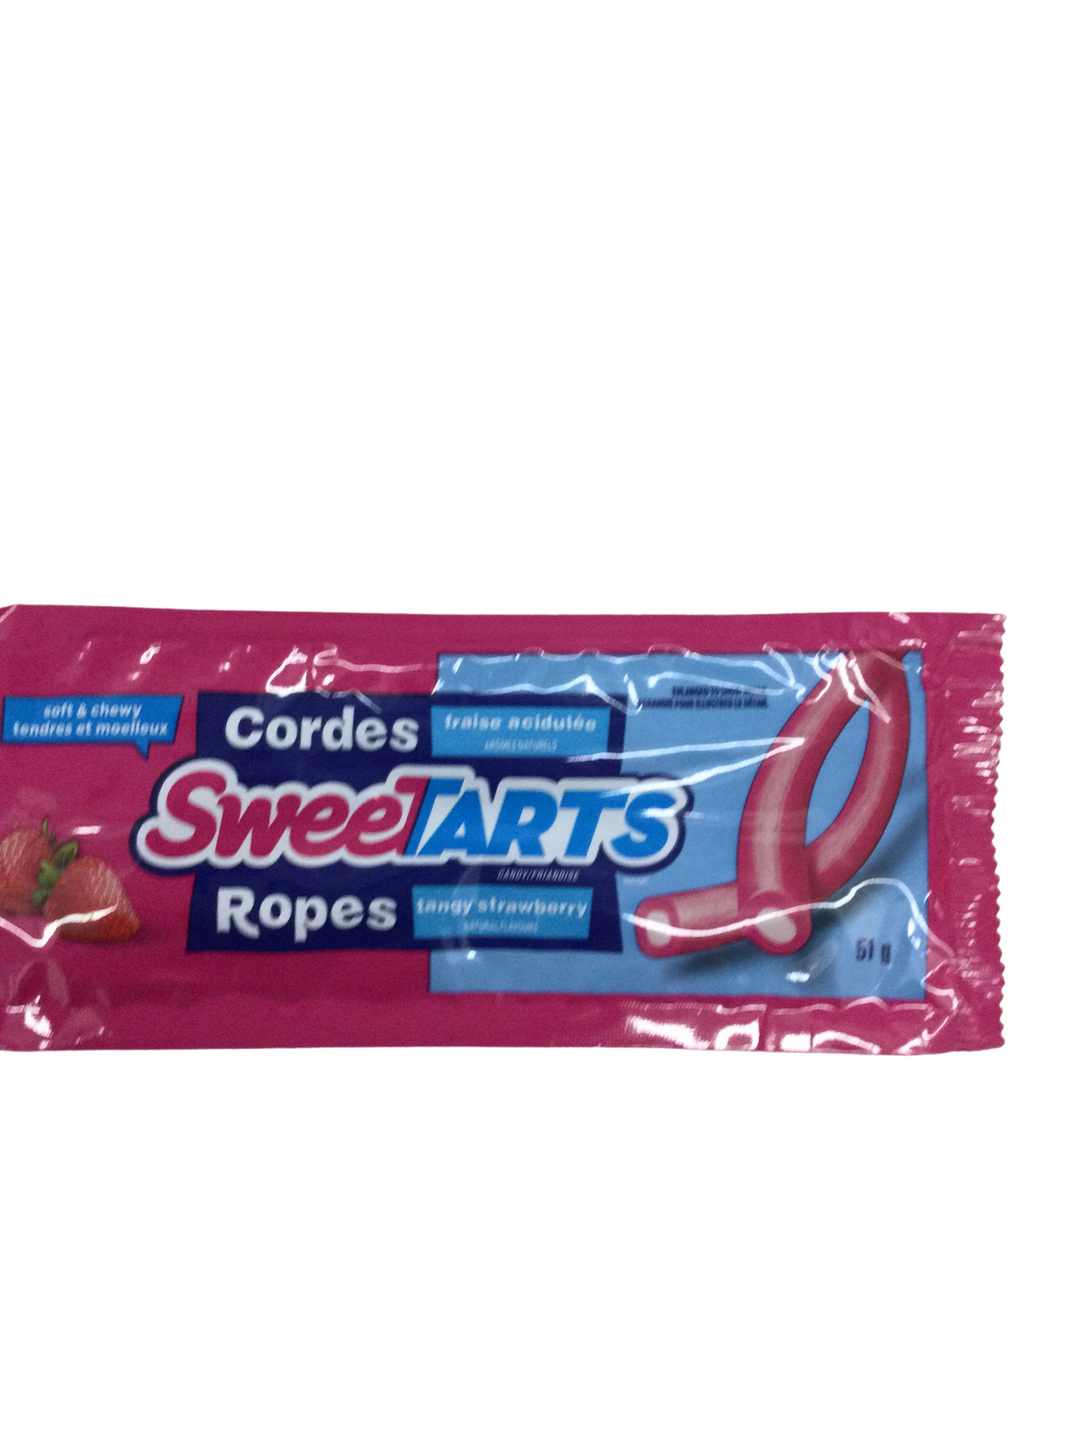 Sweetarts Ropes Tangy Strawberry 51 G